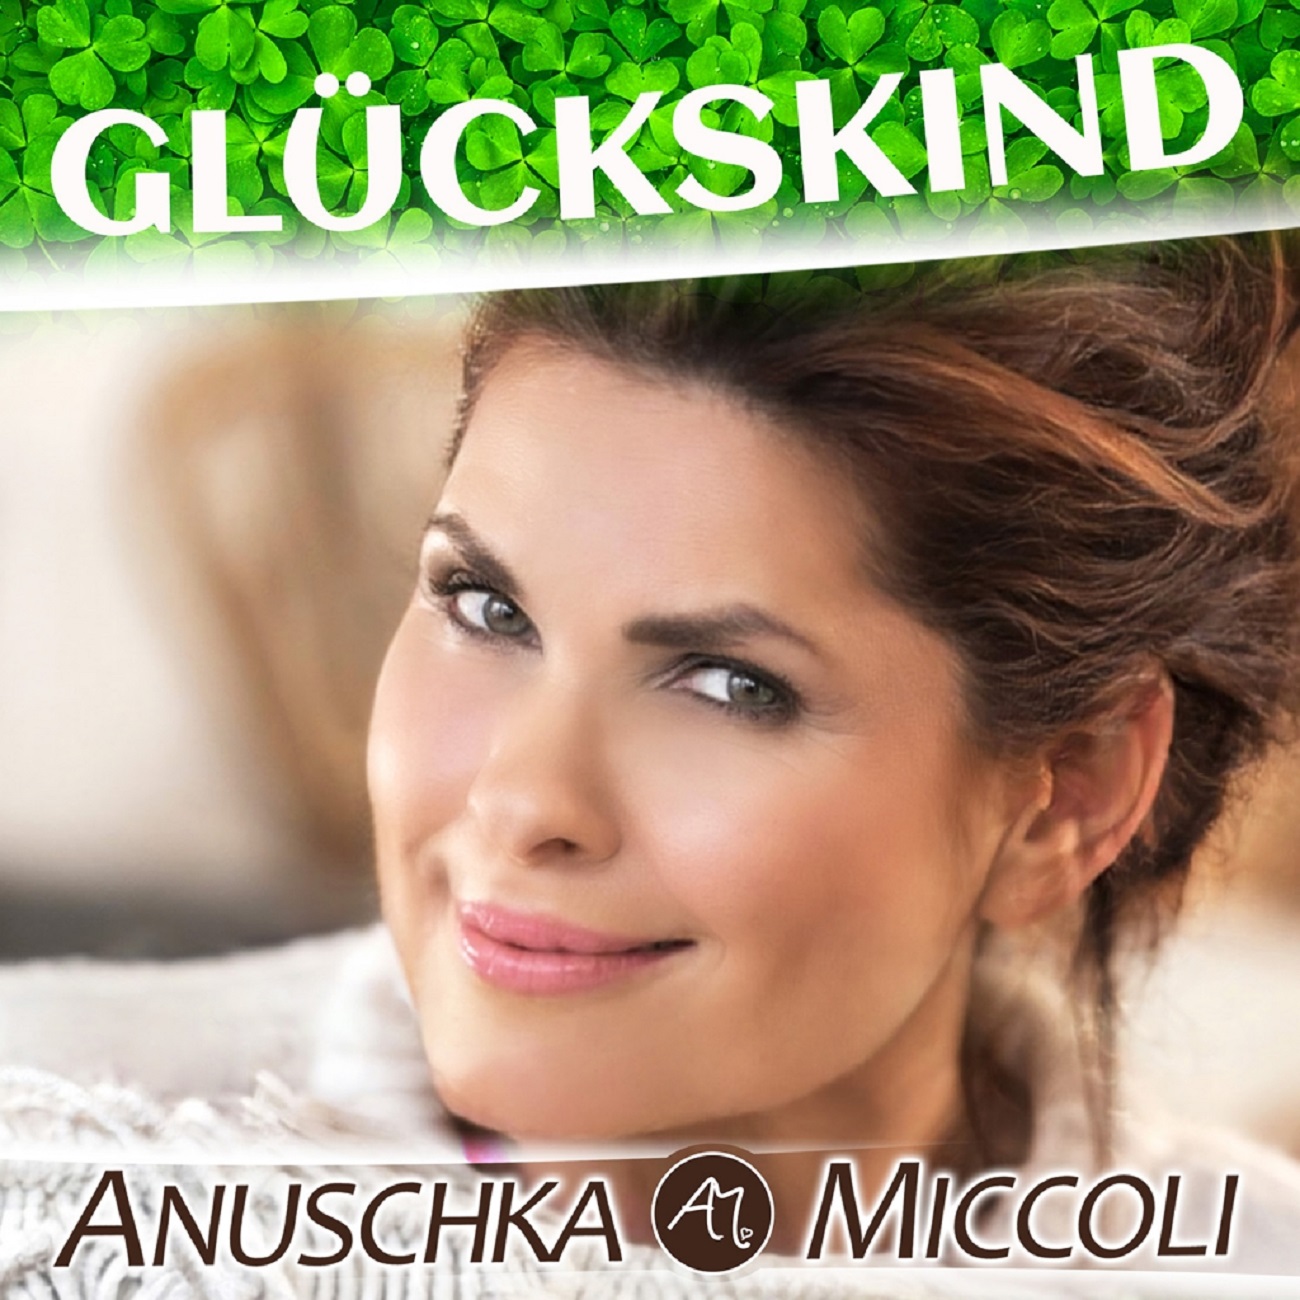 Anuschka Niccoli - Glckskind - cover.jpg